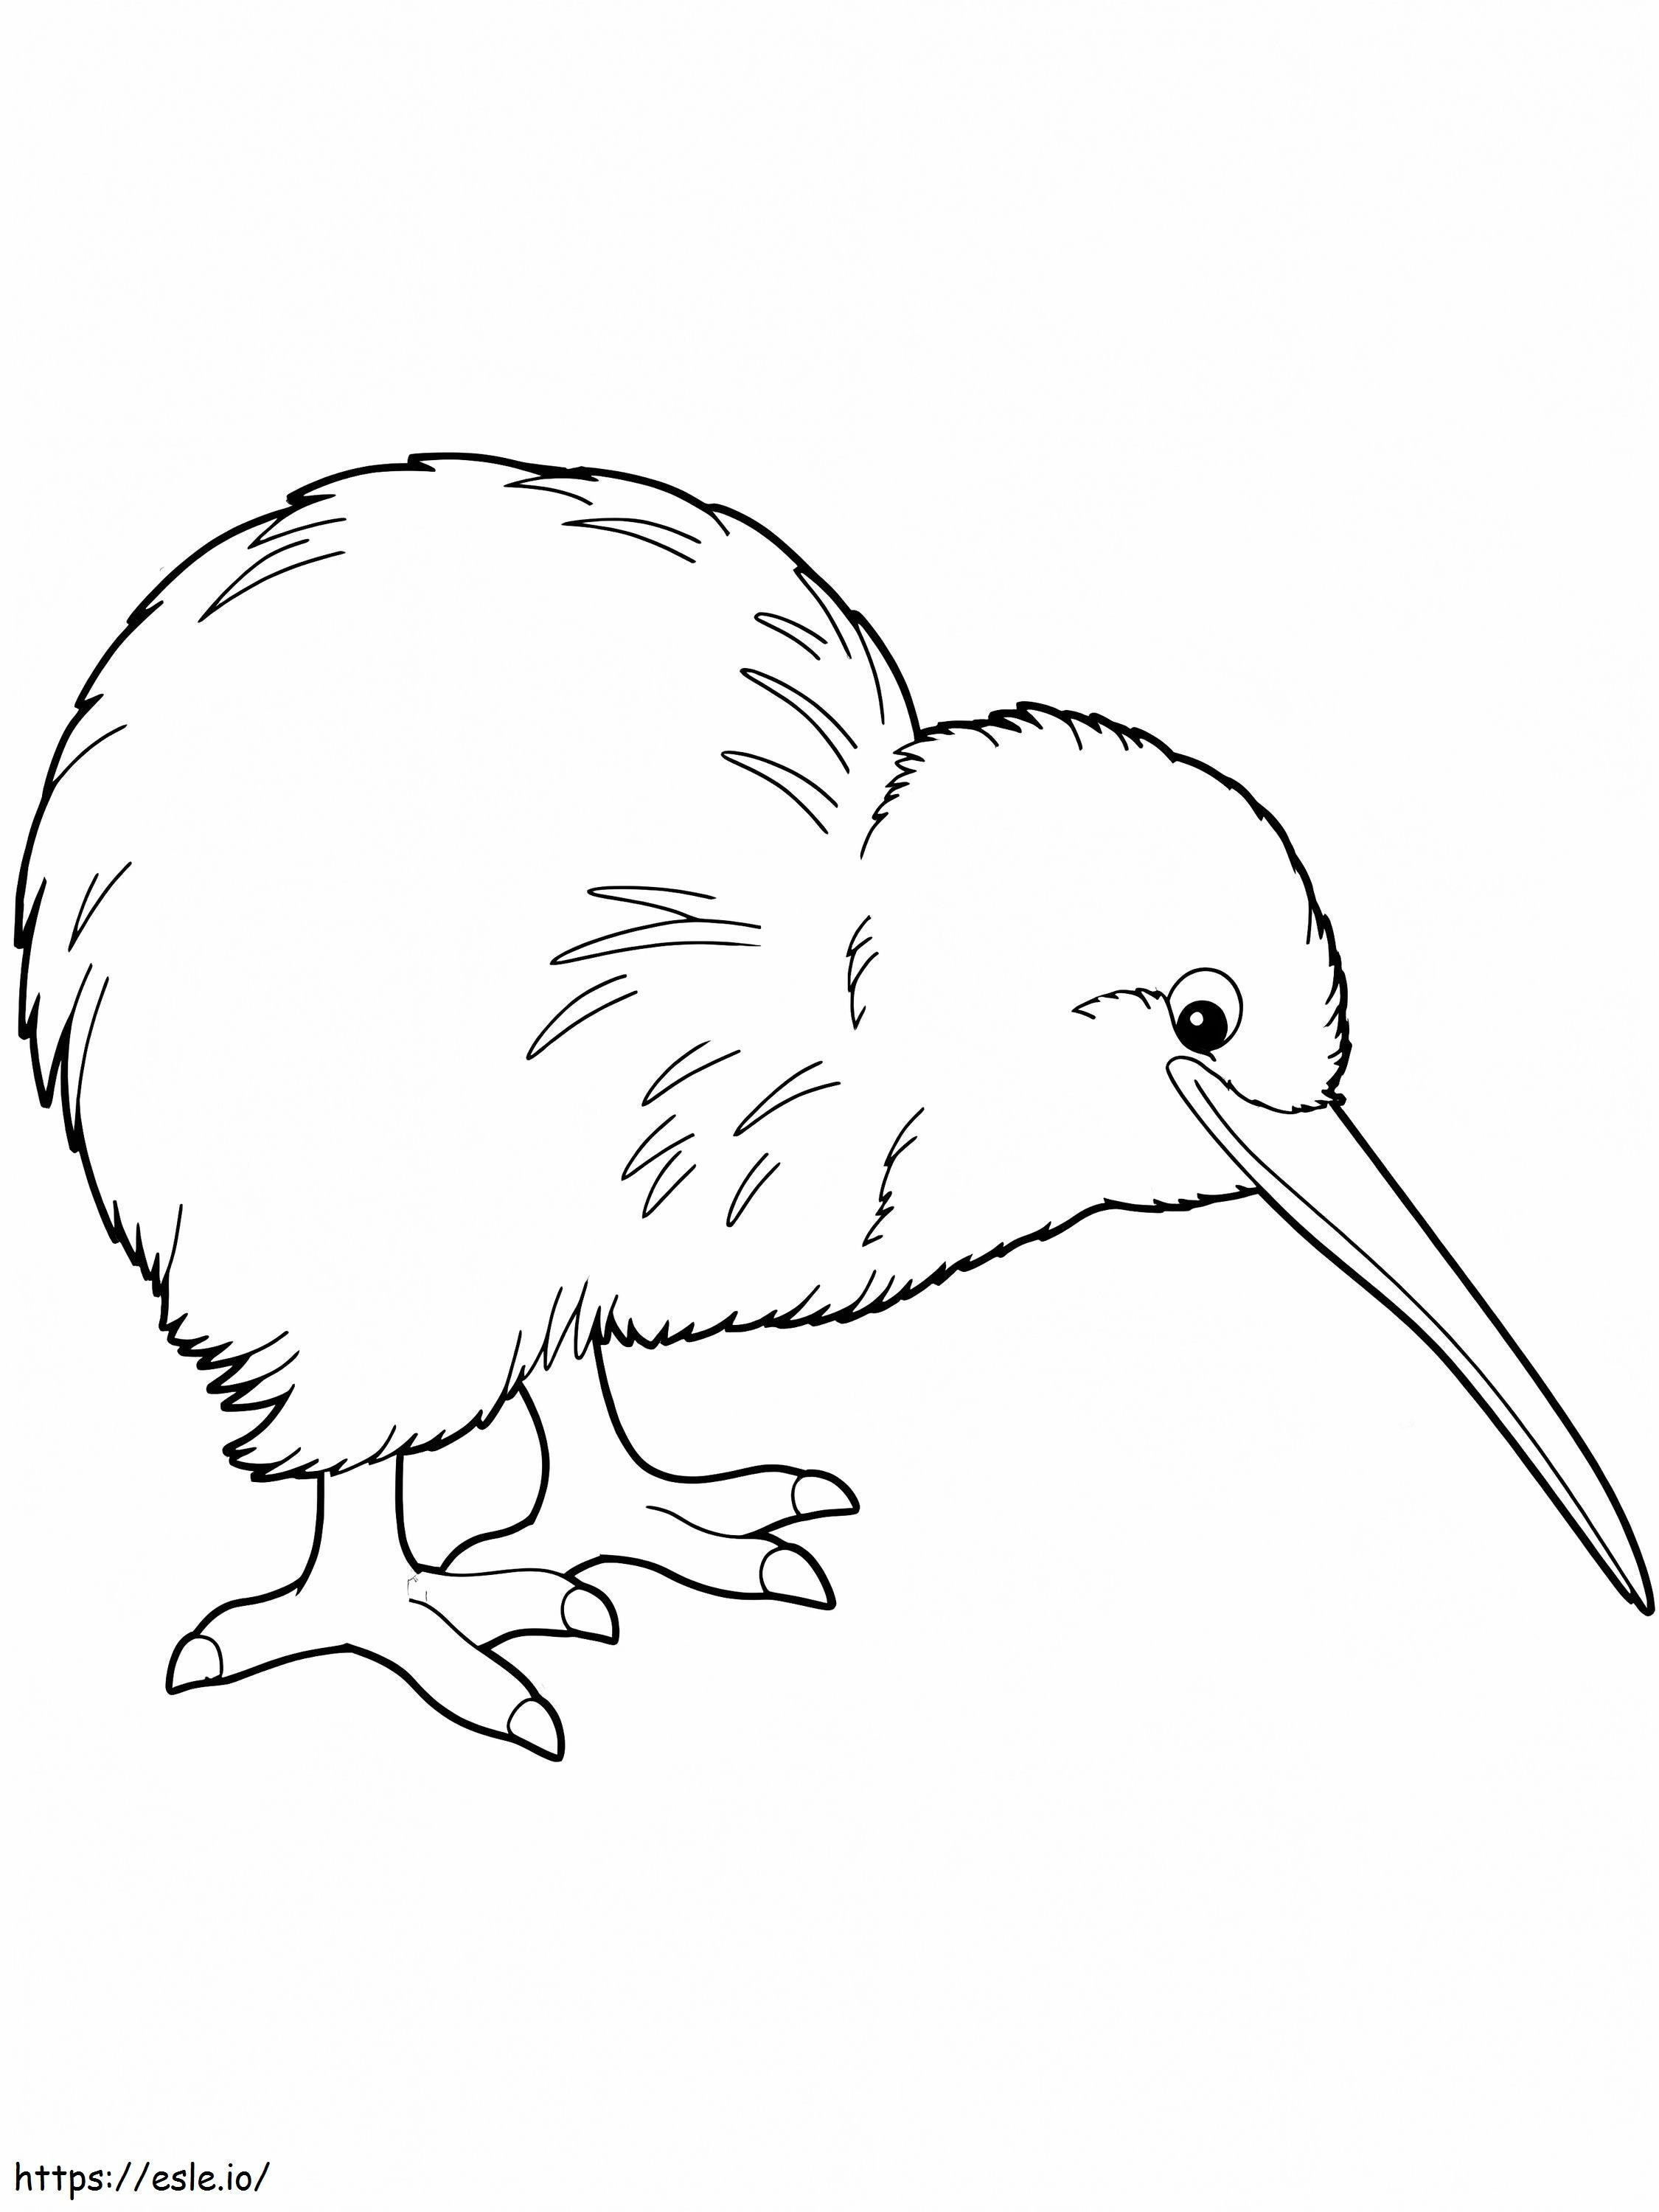 Simple Kiwi Bird coloring page